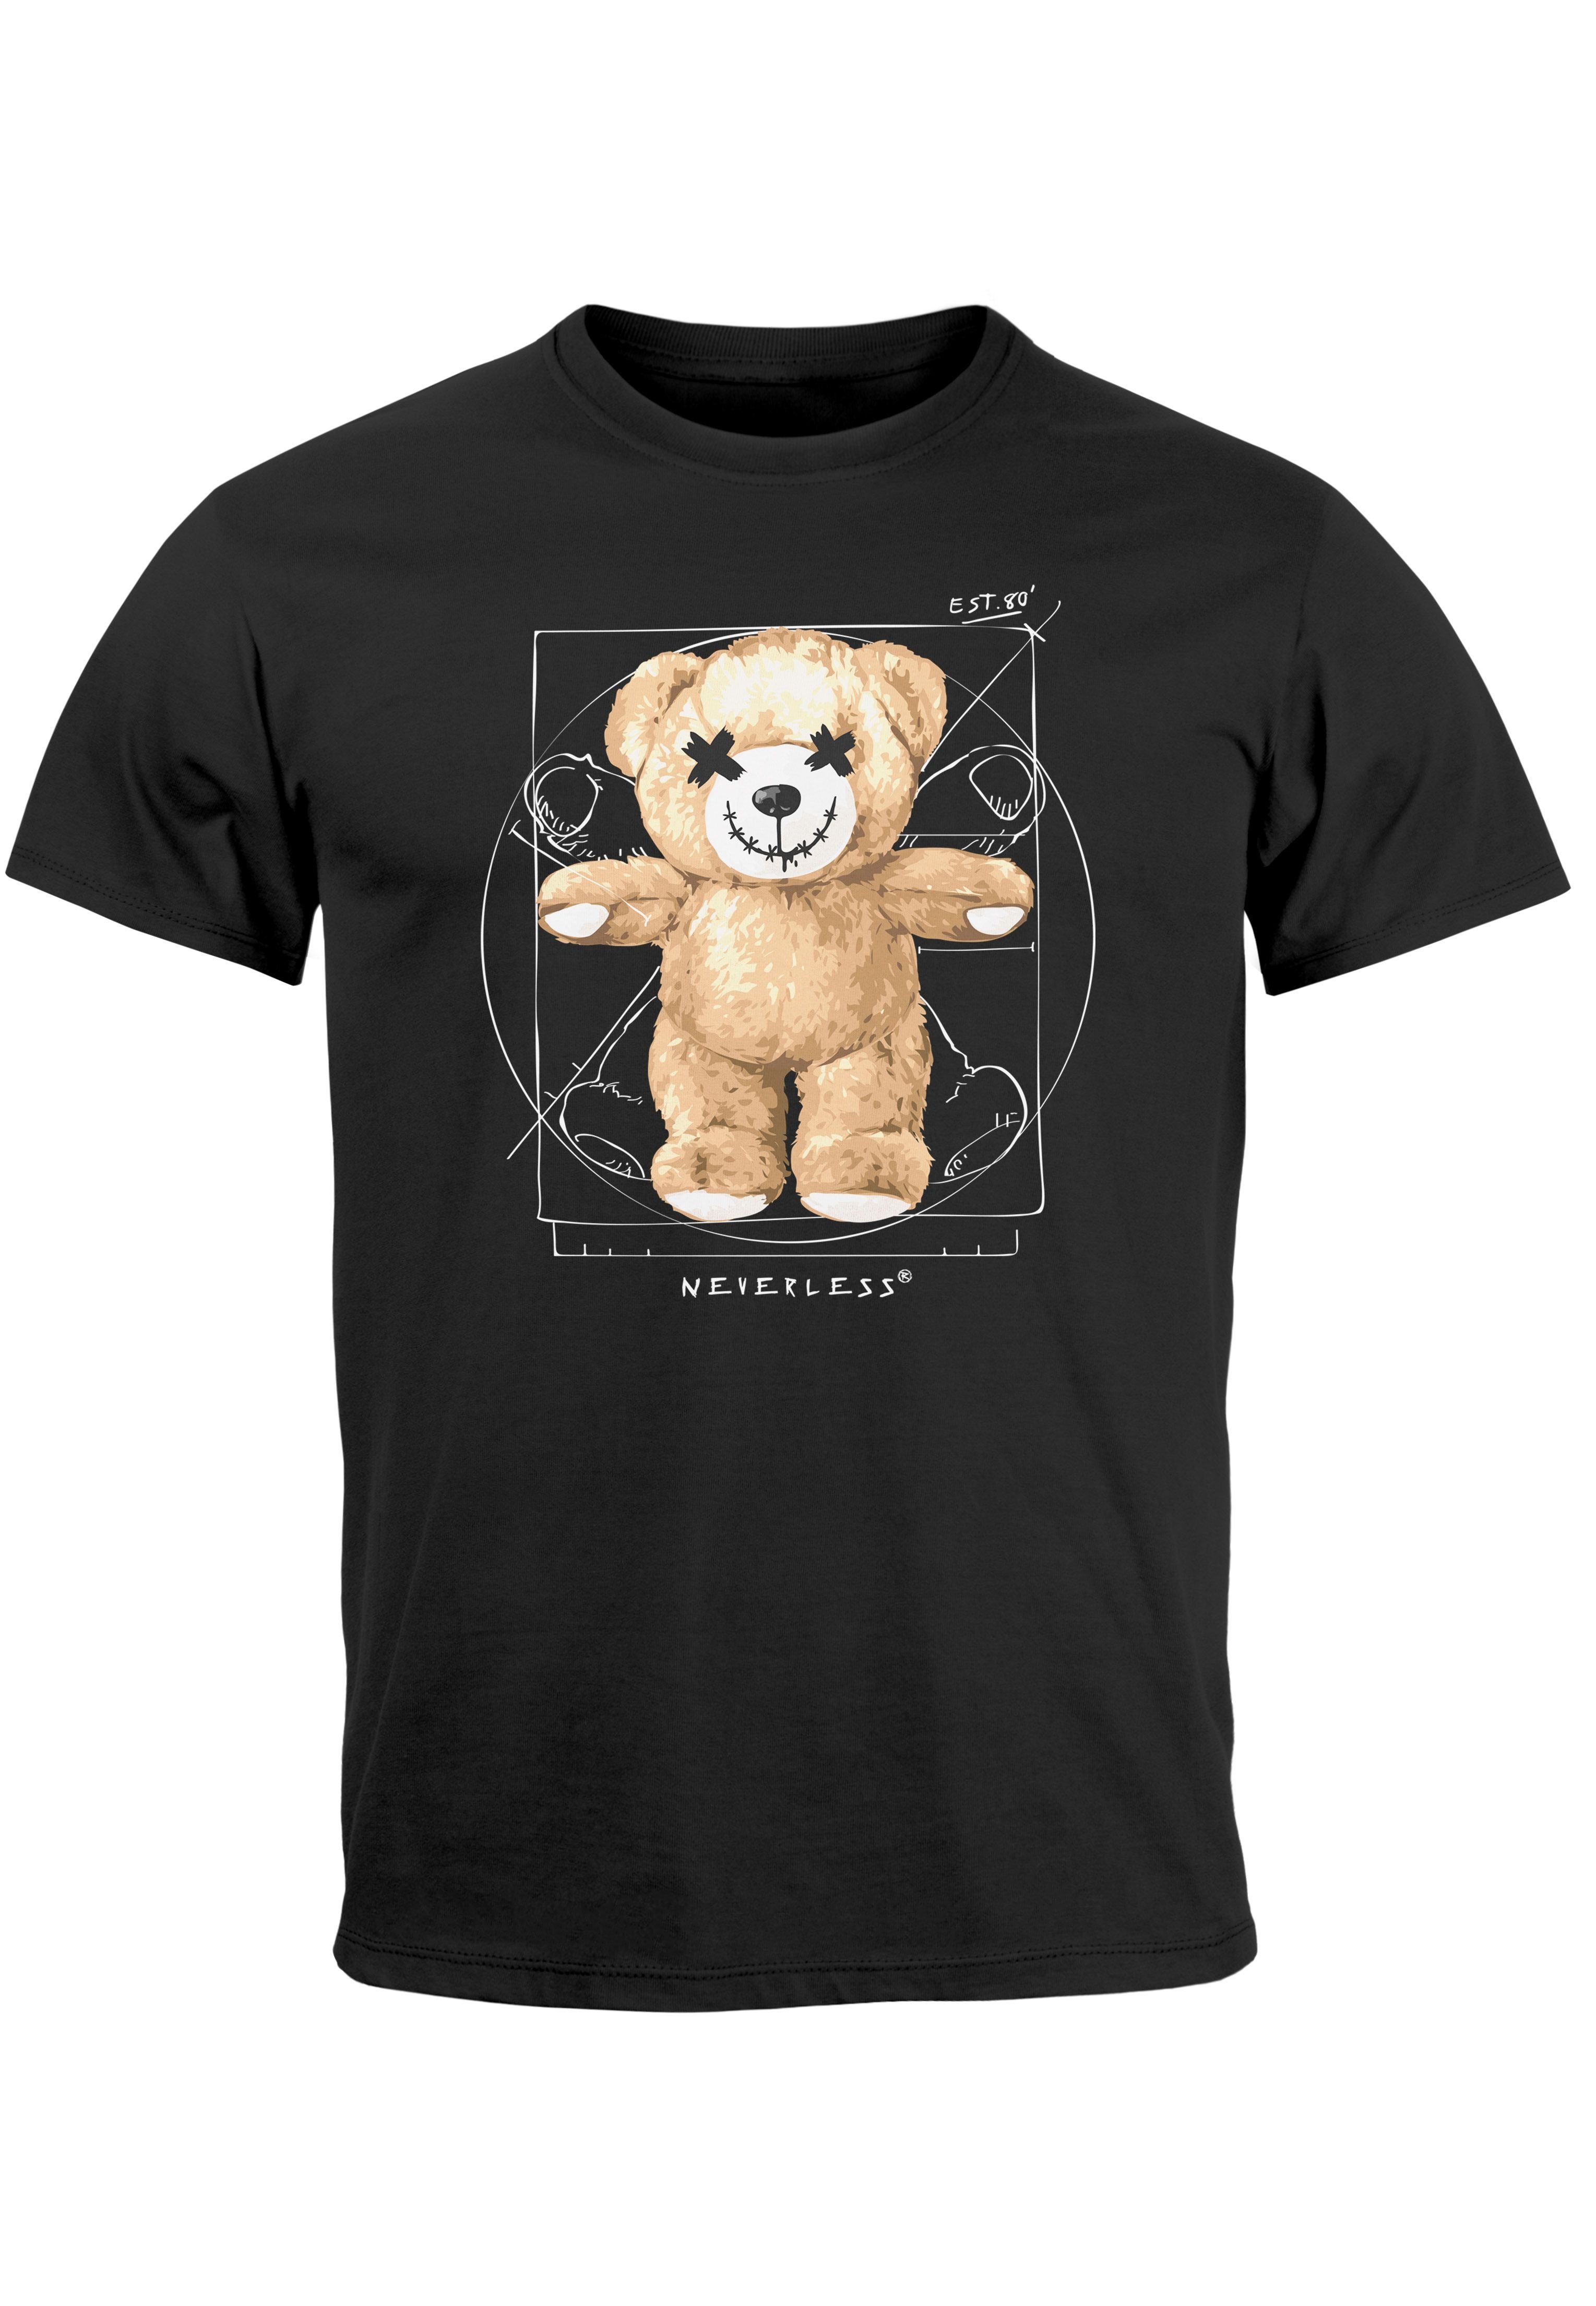 Meme Neverless Print-Shirt Parodie Fashion Bär Teddy Print T-Shirt DaVinci Print schwarz Streetstyl mit Herren